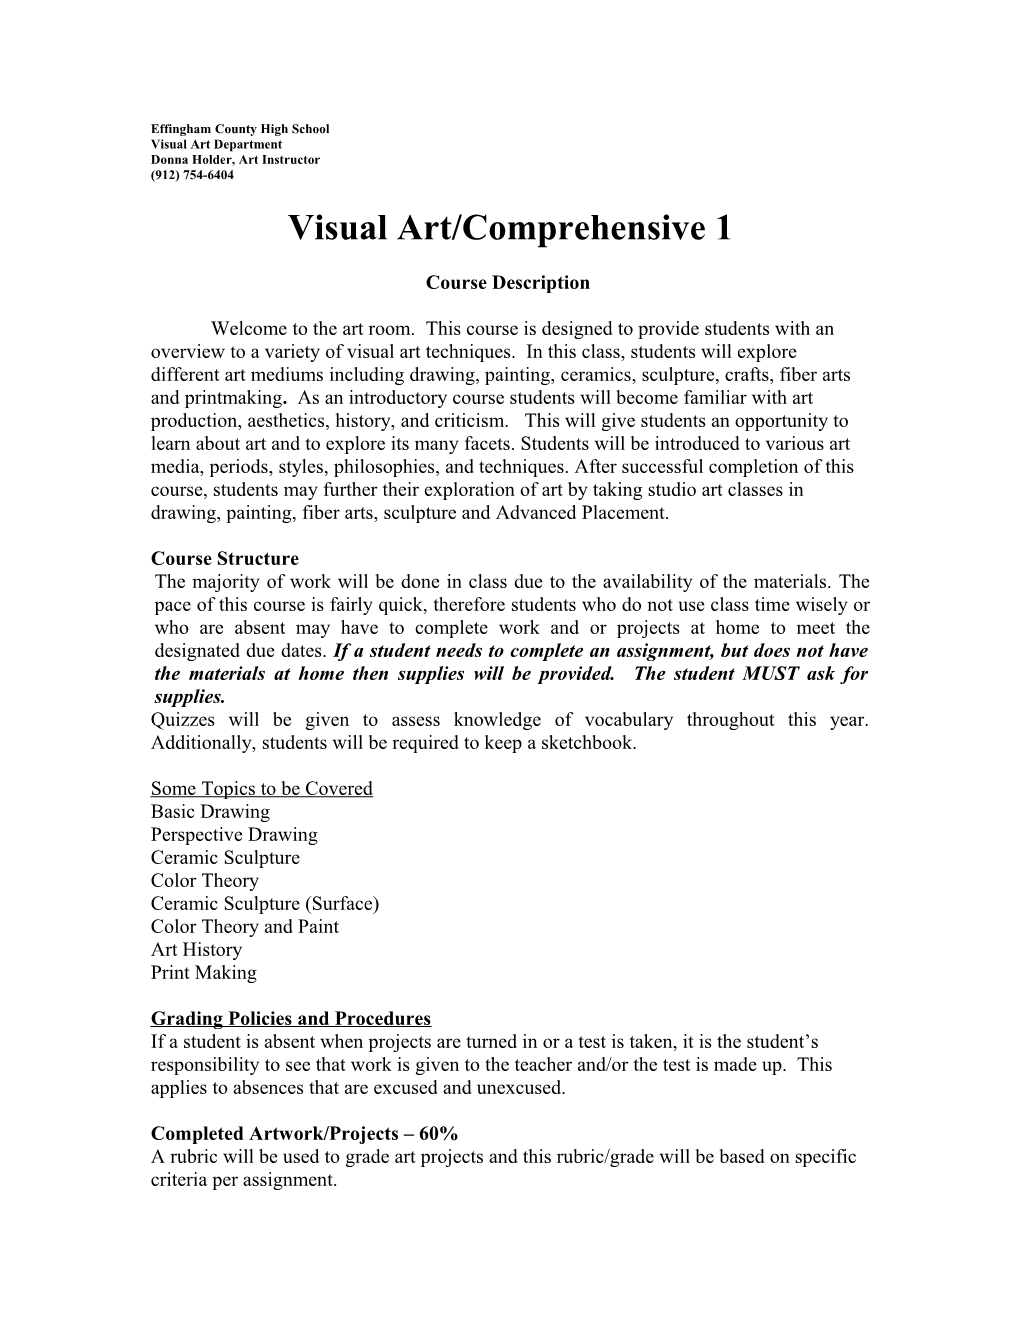 Visual Art/Comprehensive 1